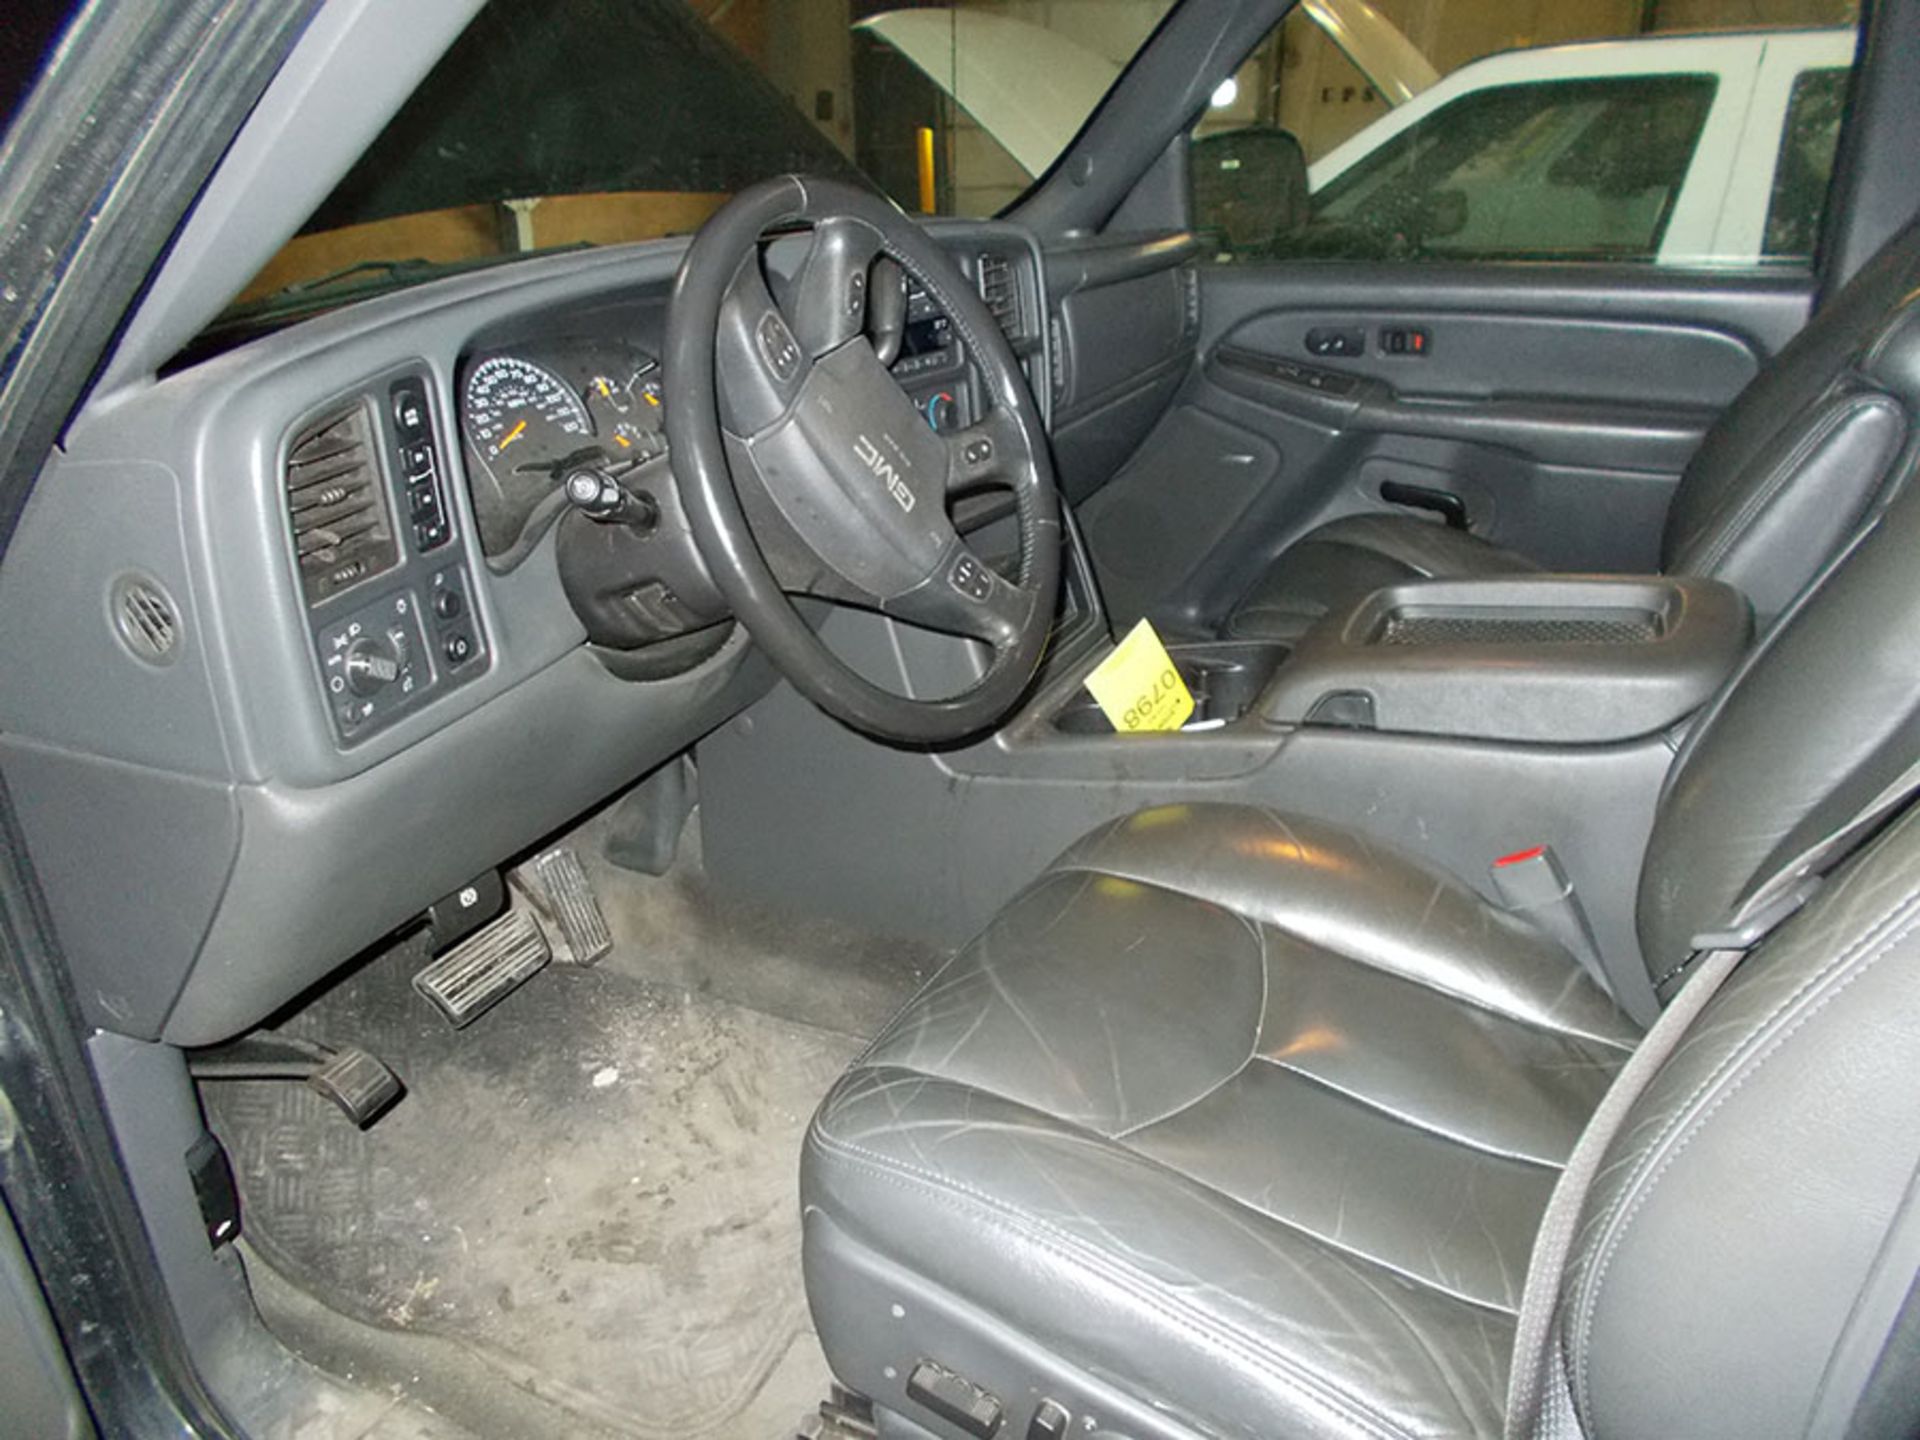 2005 GMC MODEL Z71 OFF ROAD 4-WHEEL DRIVE TRUCK; CREW CAB, SLT, 195,679 MILES, 6' BED, VIN - Image 5 of 6